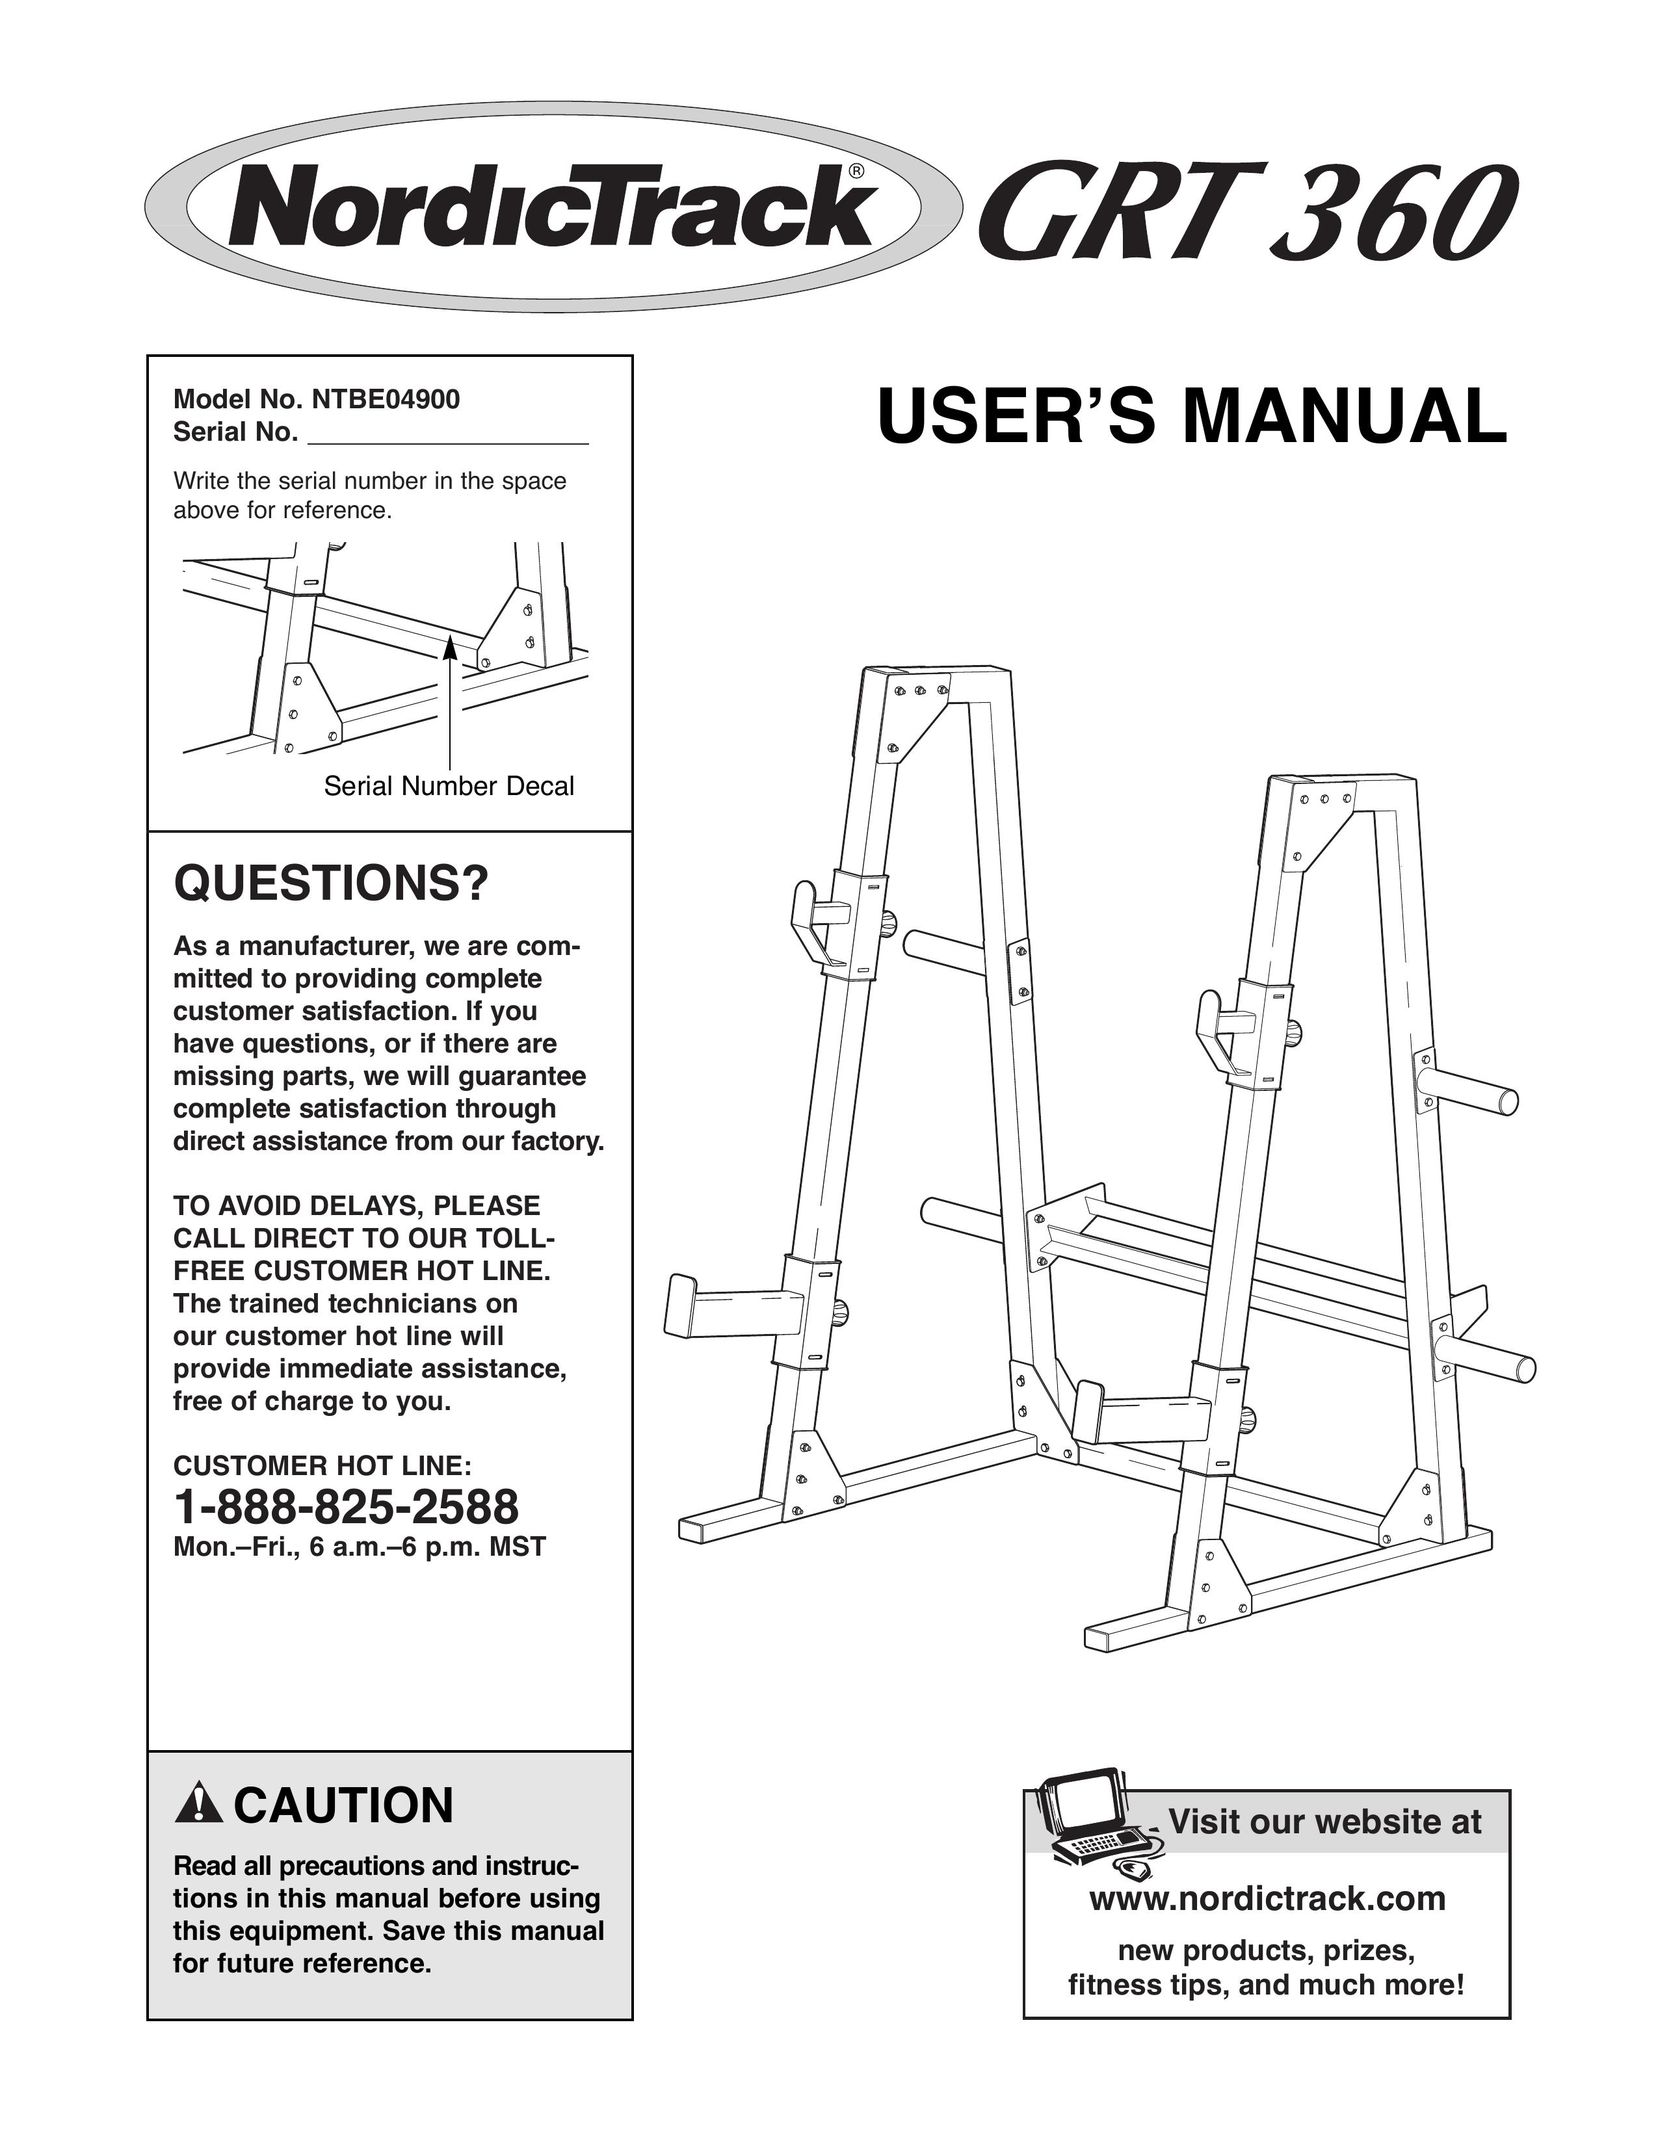 NordicTrack GRT360 Home Gym User Manual